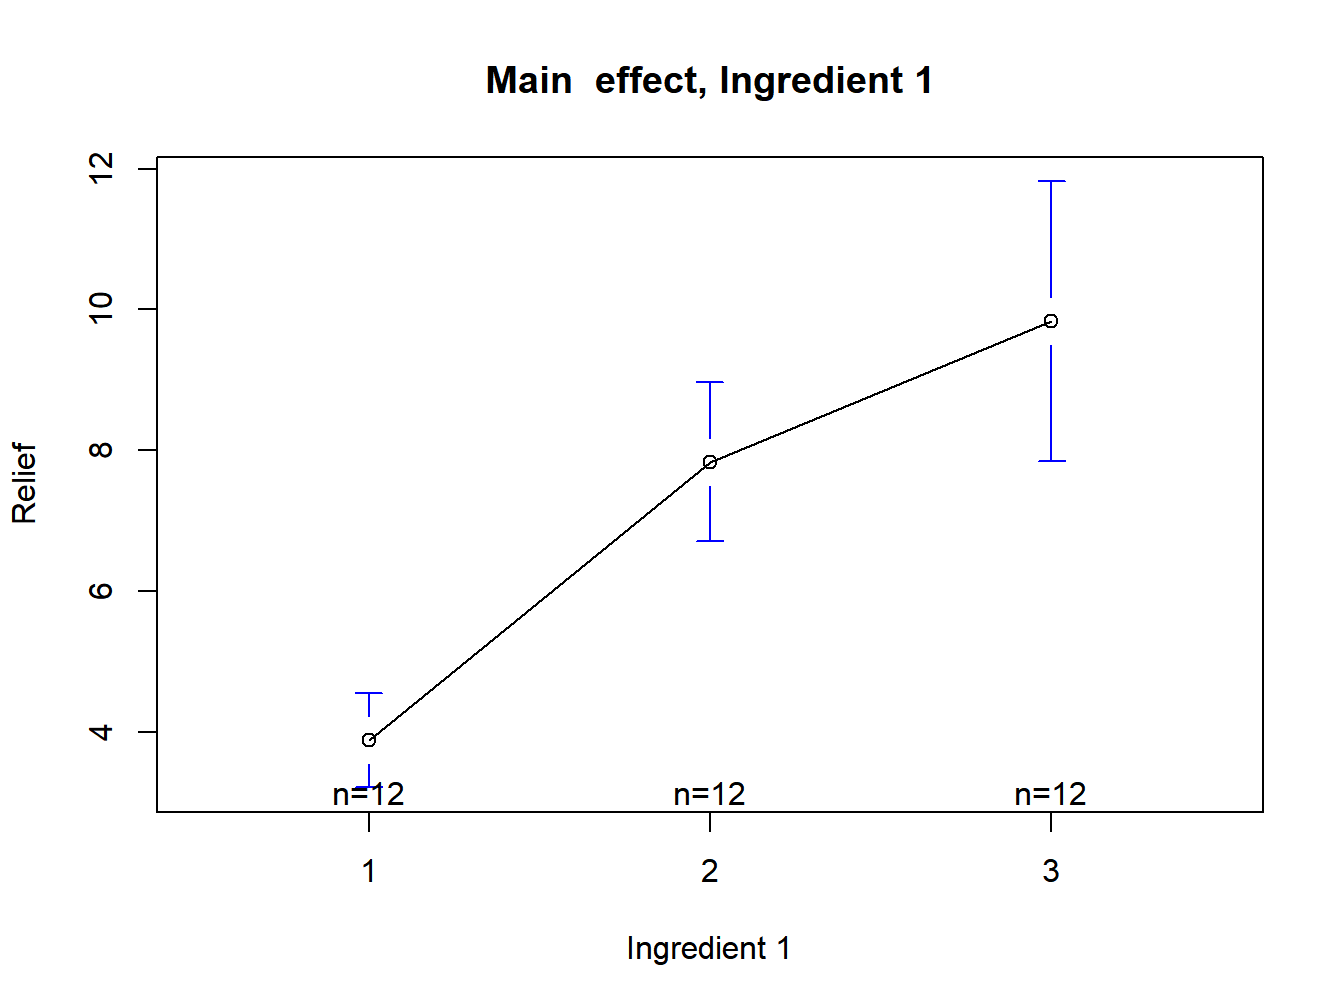 Main effect plot for ingredient 1